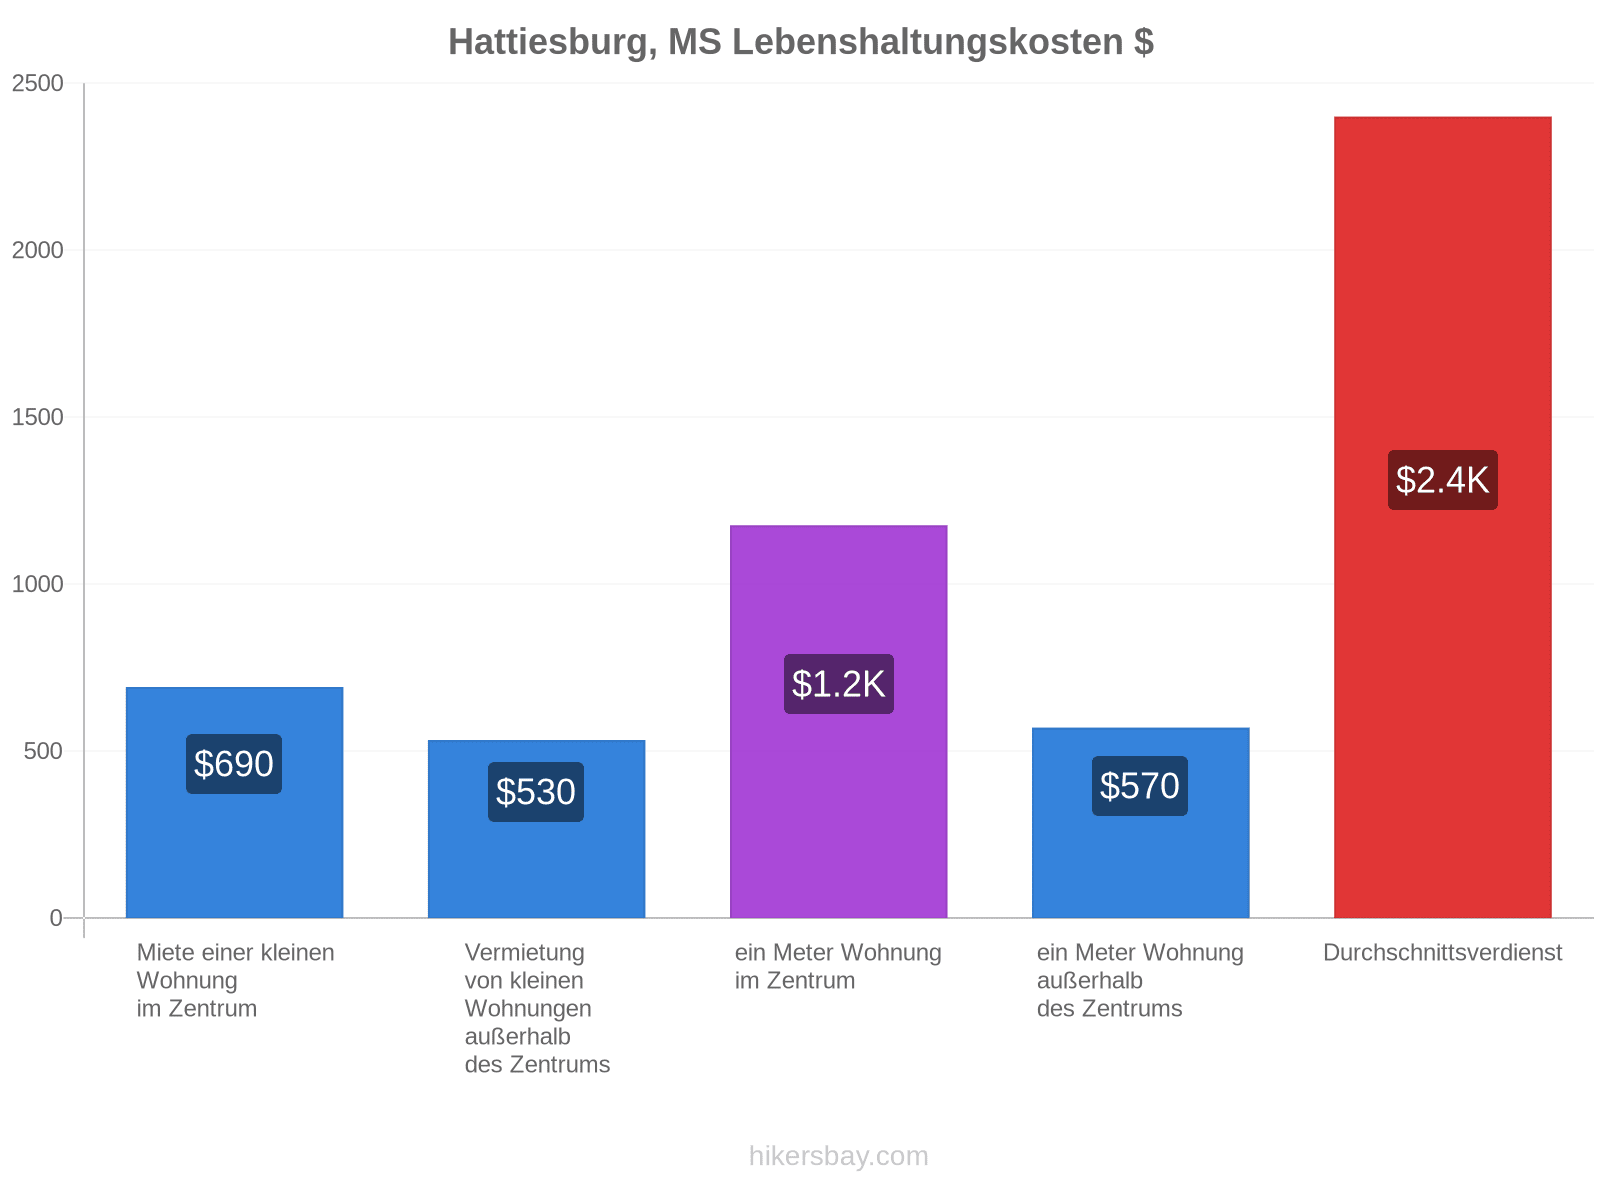 Hattiesburg, MS Lebenshaltungskosten hikersbay.com